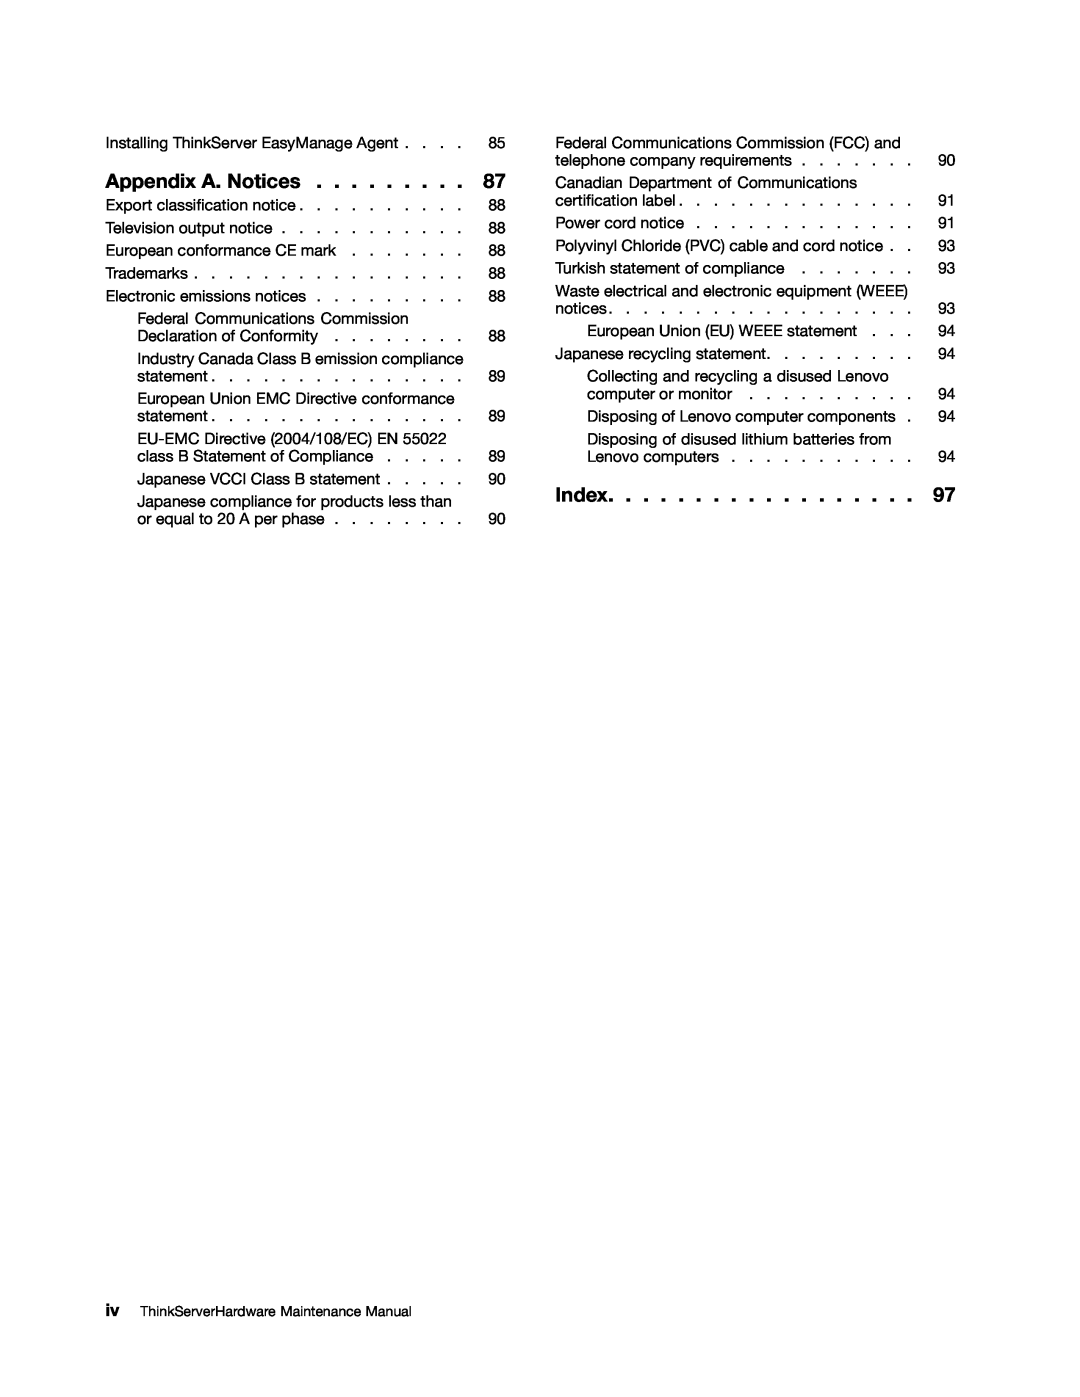 Lenovo 1008, 992, 981, 1010 manual Appendix A. Notices, Index, iv ThinkServerHardware Maintenance Manual 